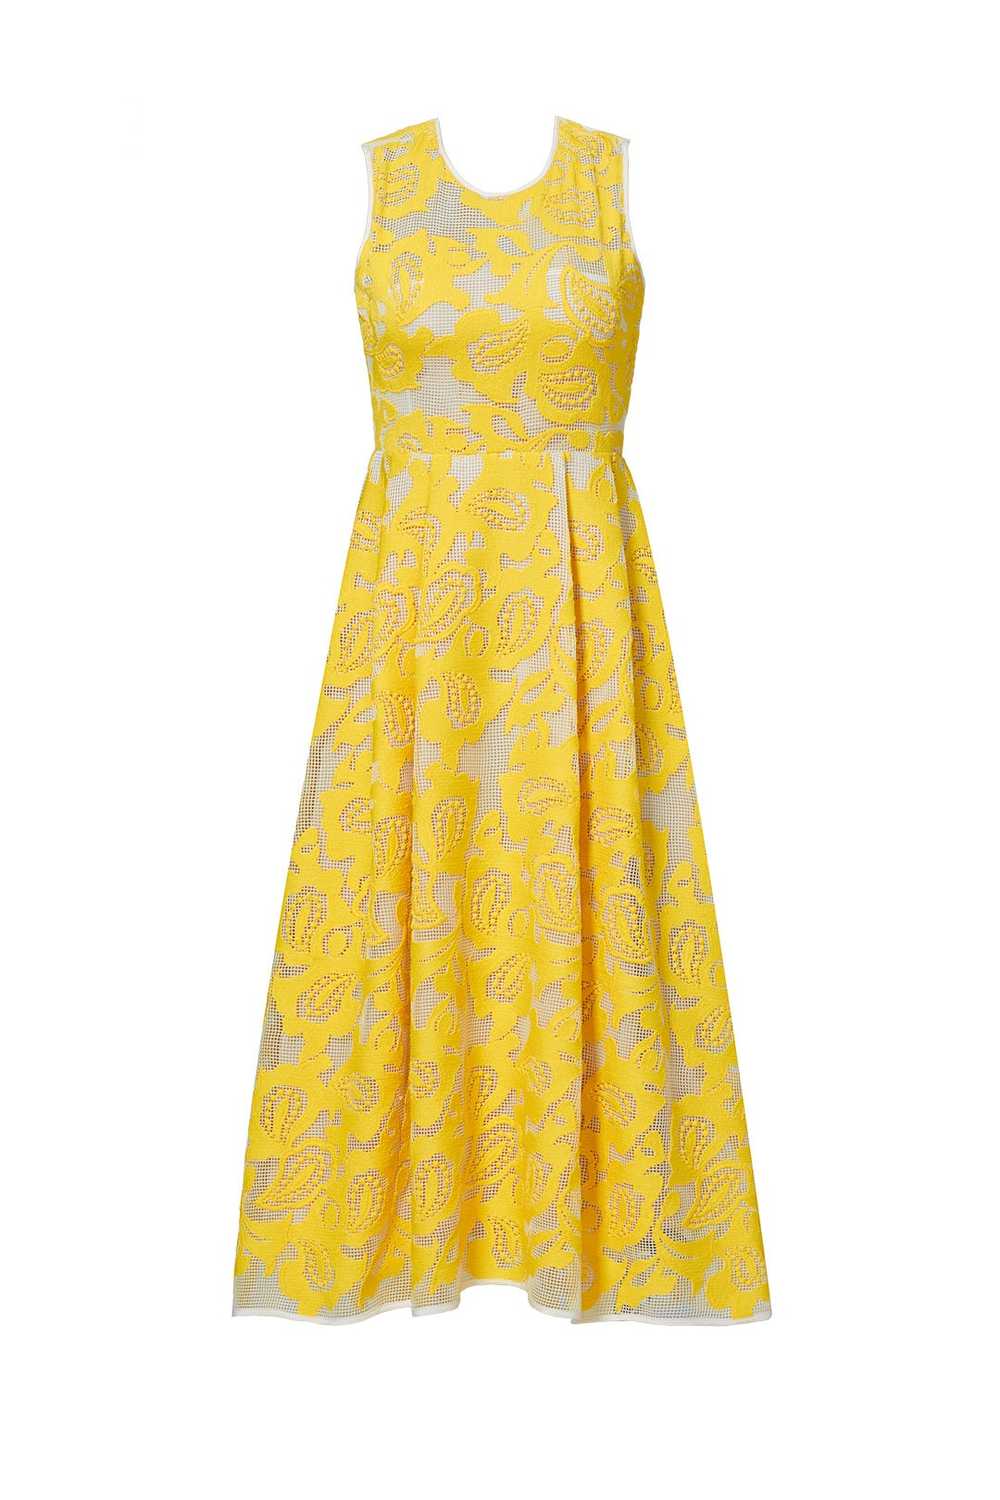 Hunter Bell Yellow Abstract Stitch Dress - image 4